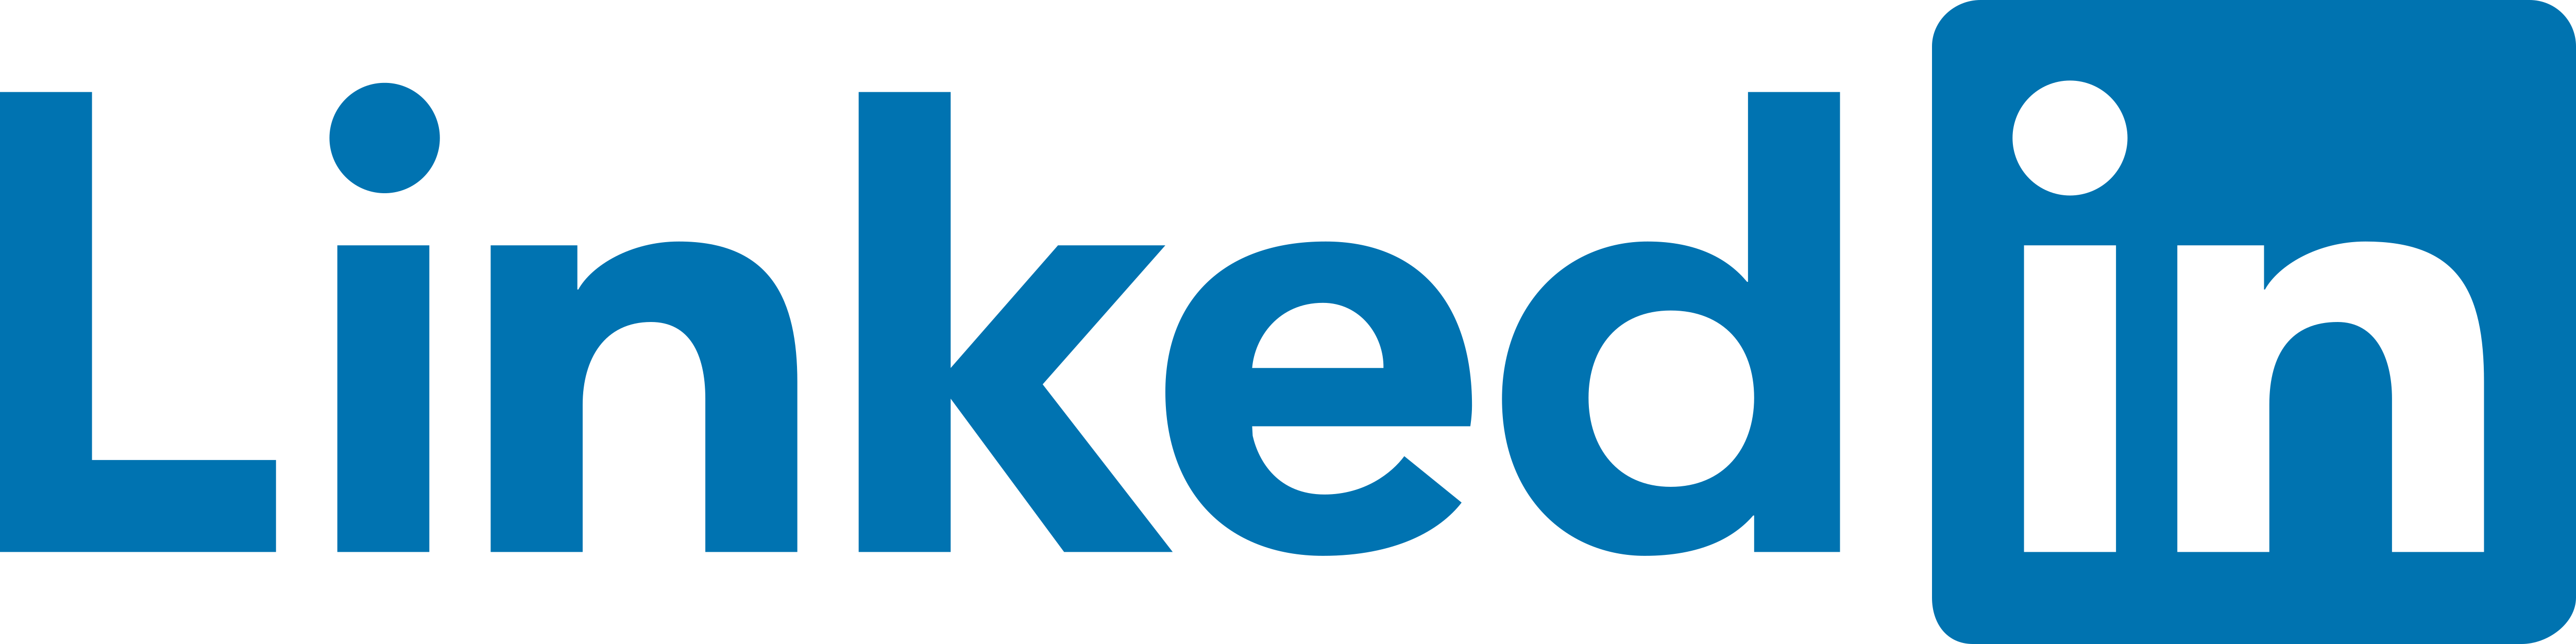 LinkedIn_Logo_2019